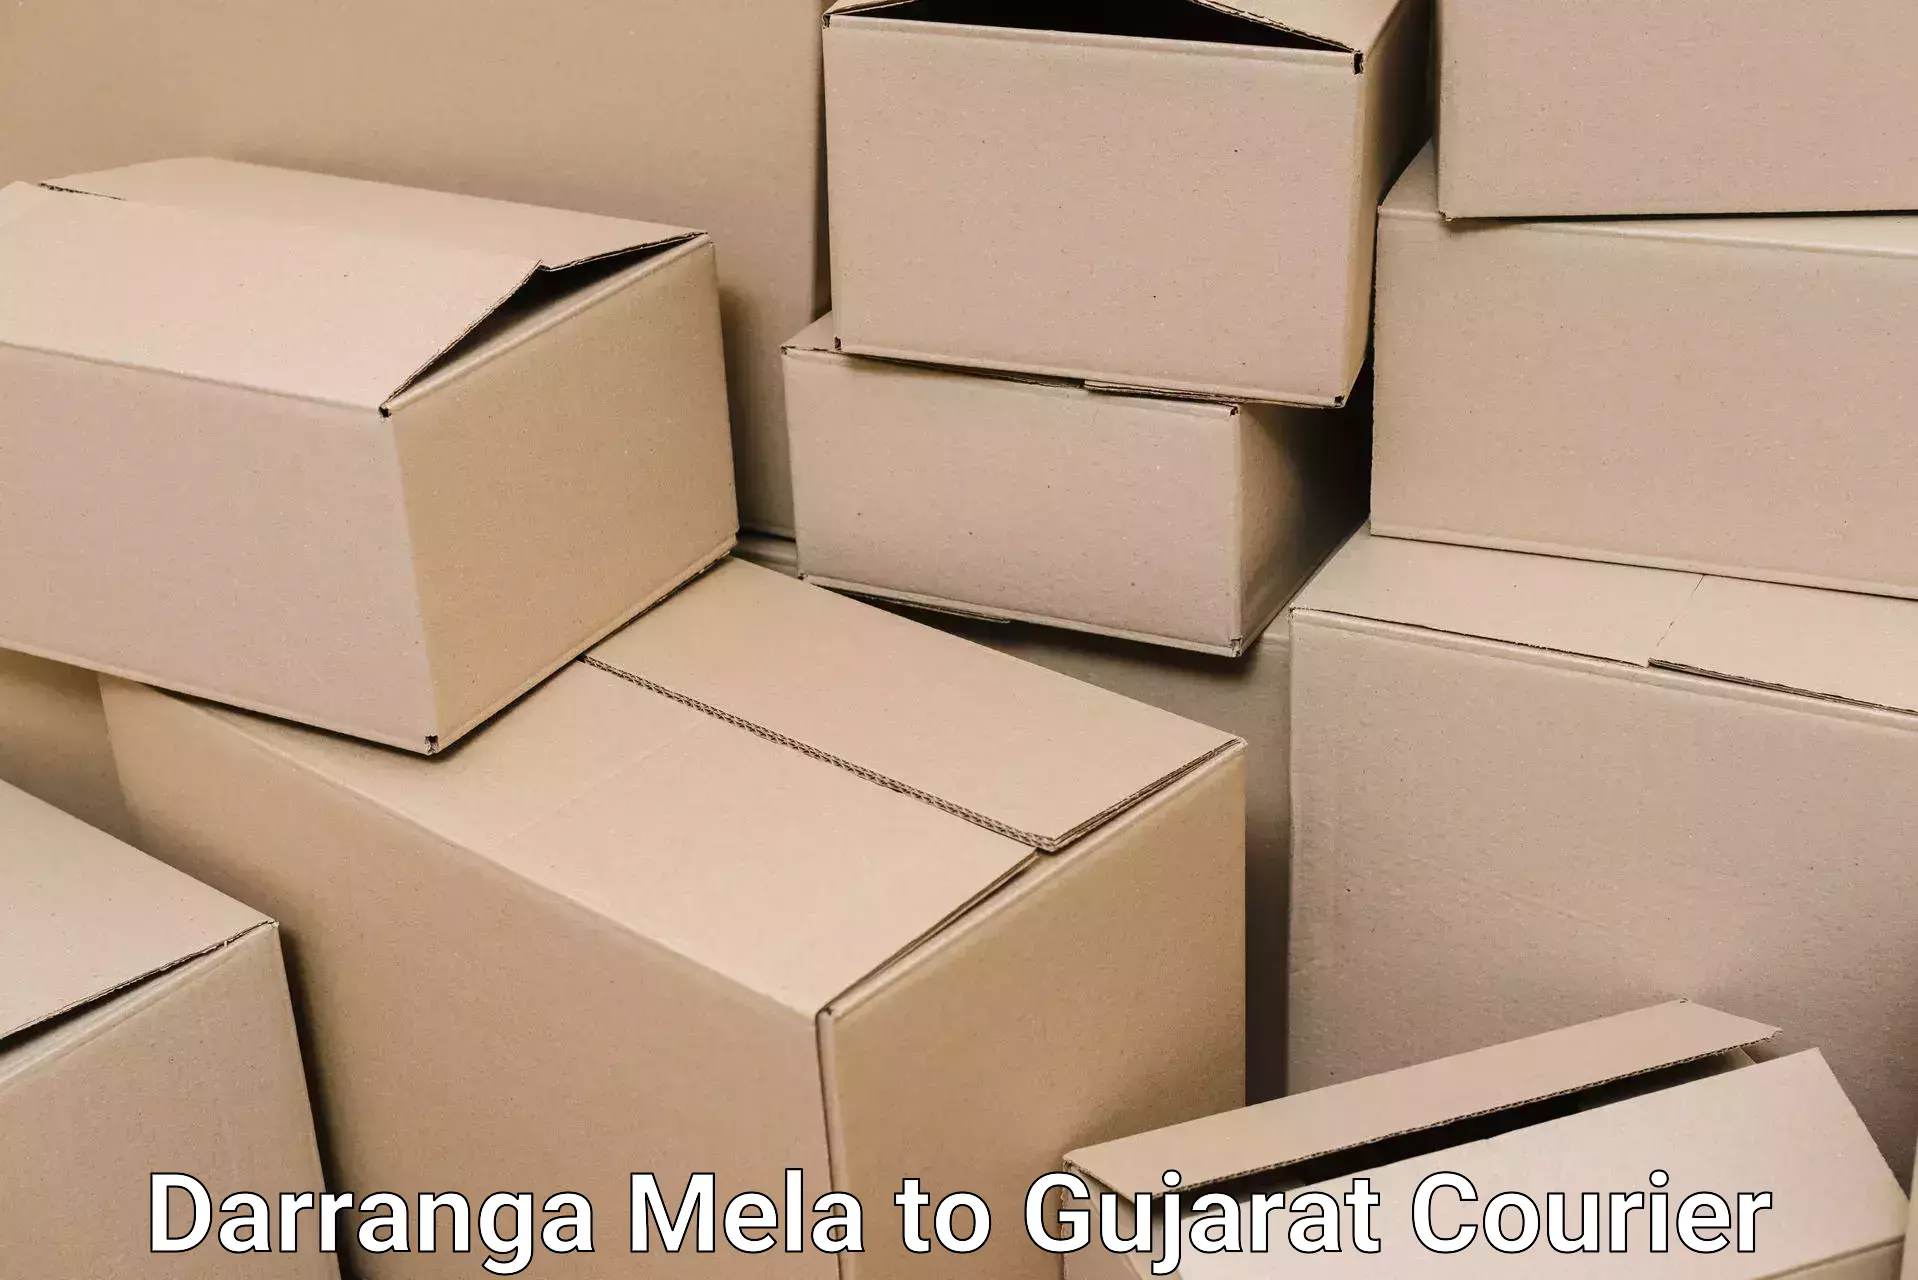 Full-service movers Darranga Mela to Gujarat